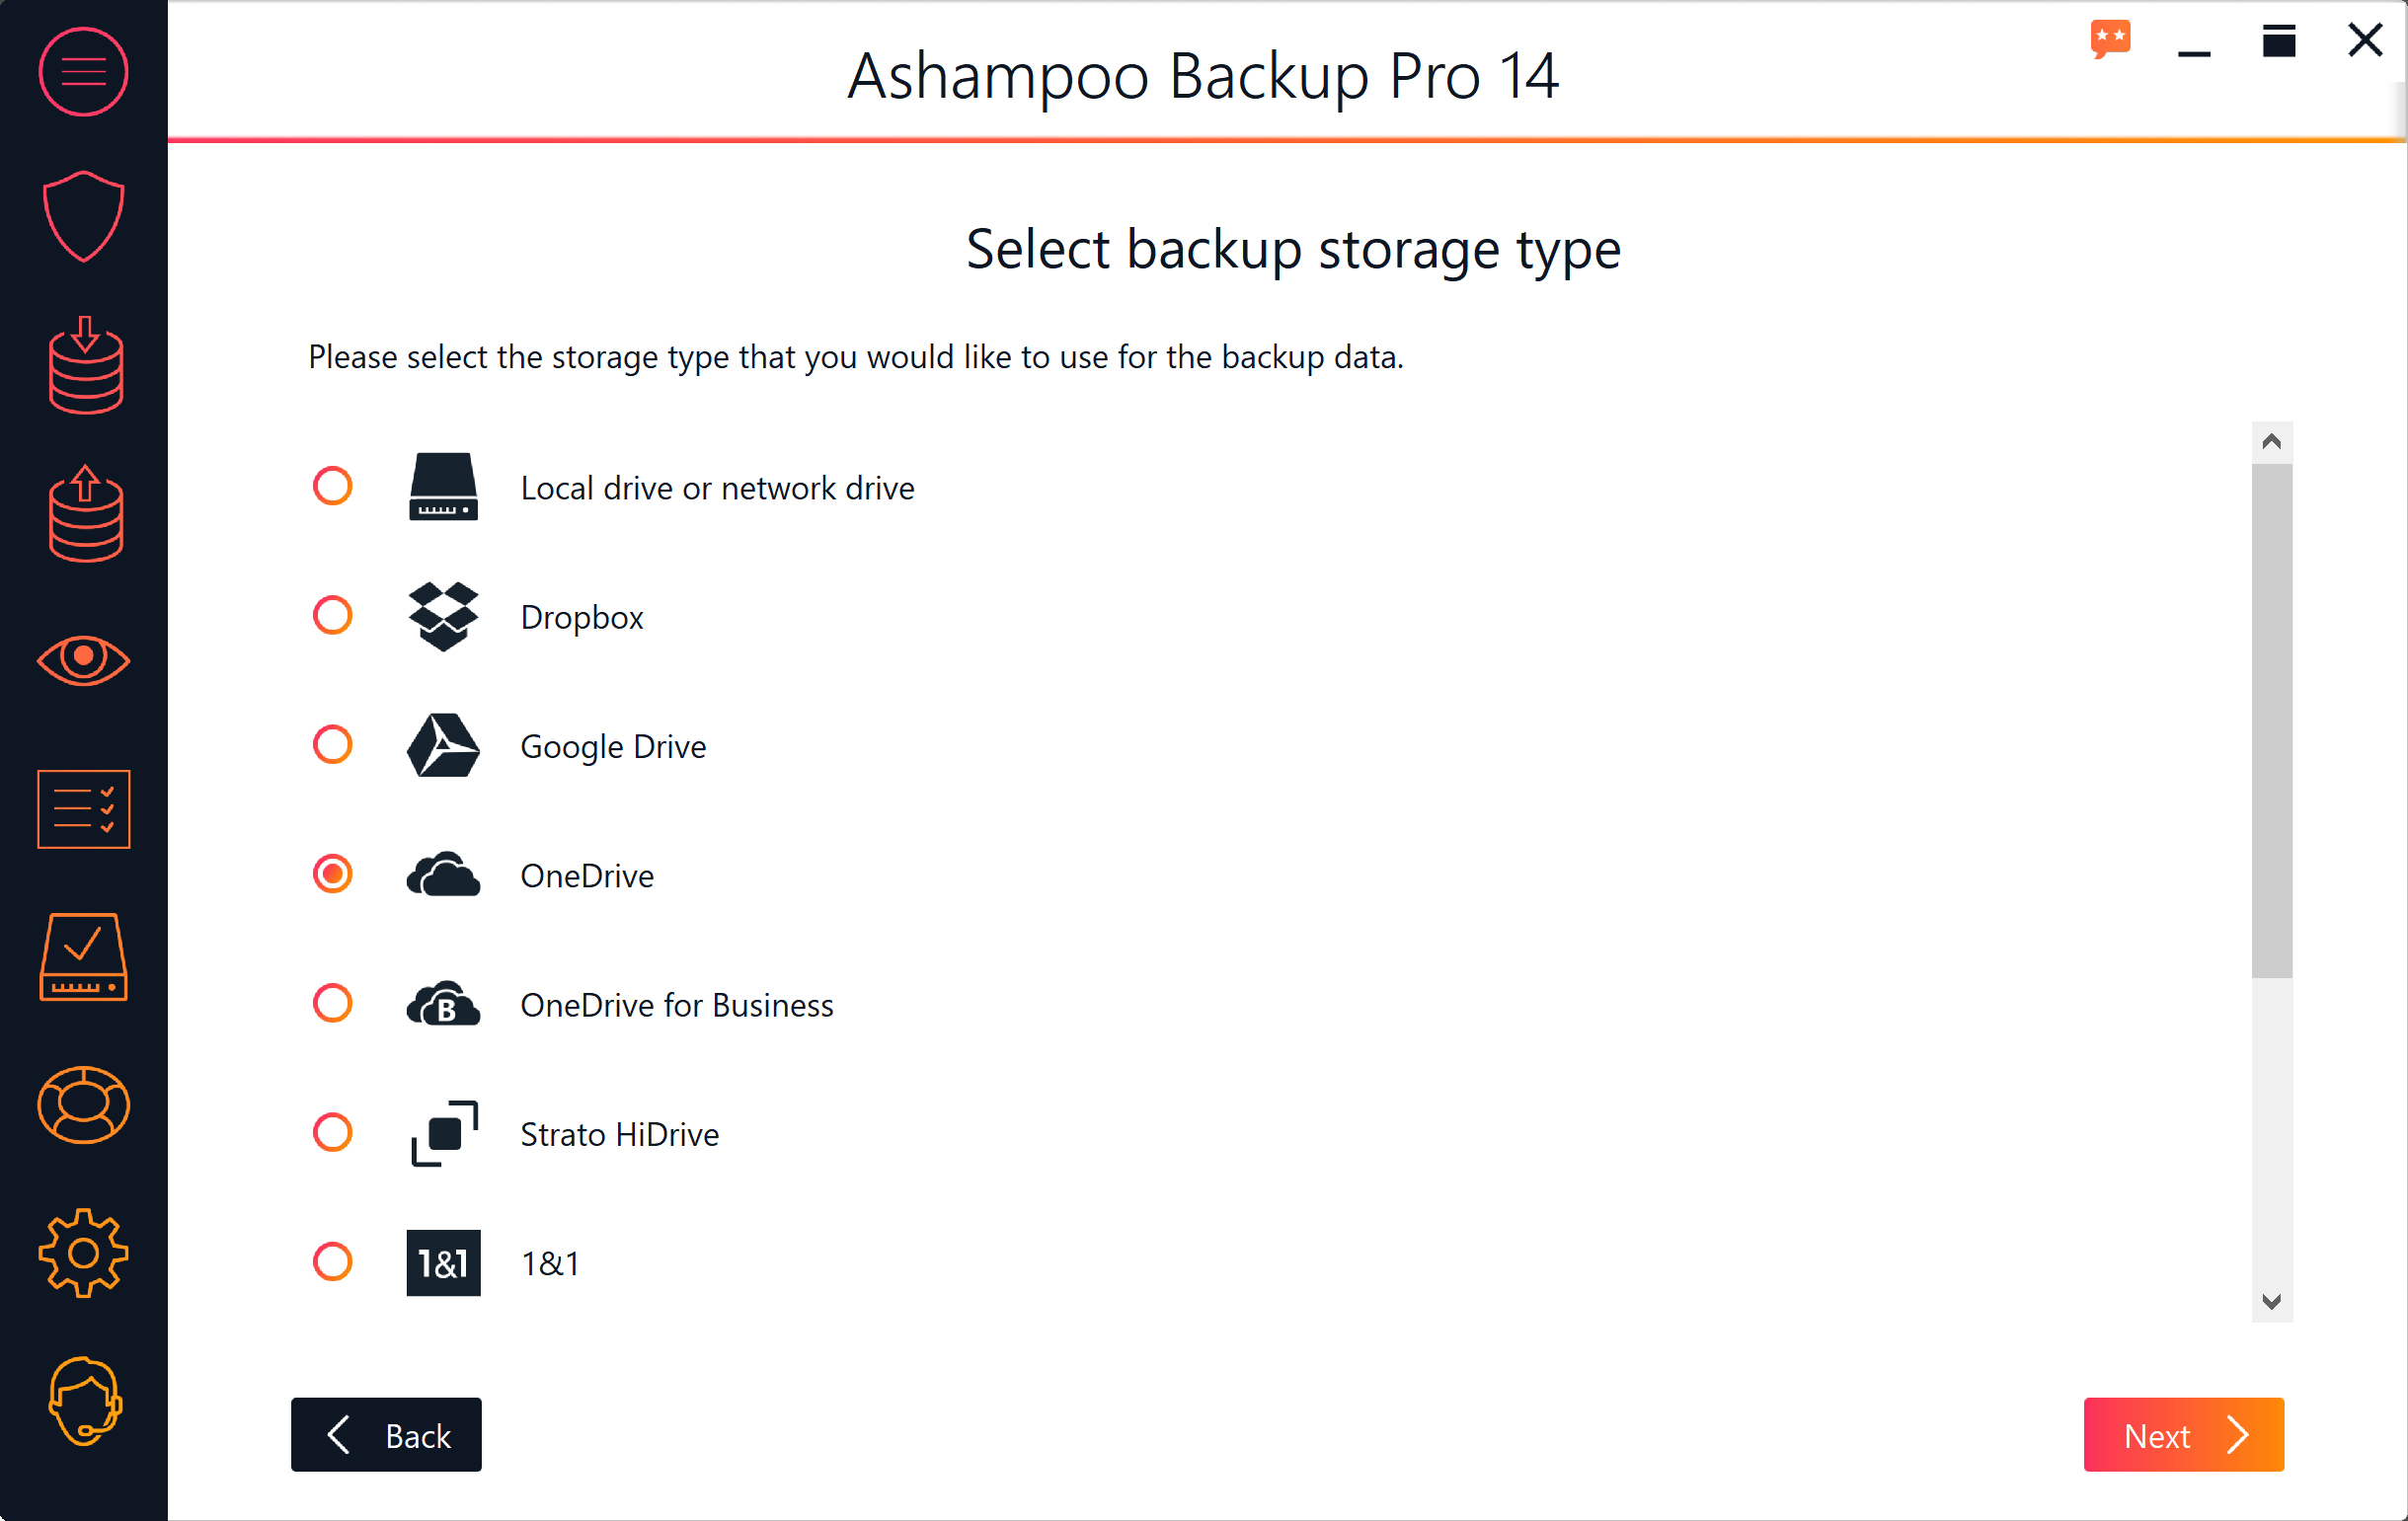 Ashampoo Backup Pro 14.0.5 Src-ashampoo-backup-14-storage-type